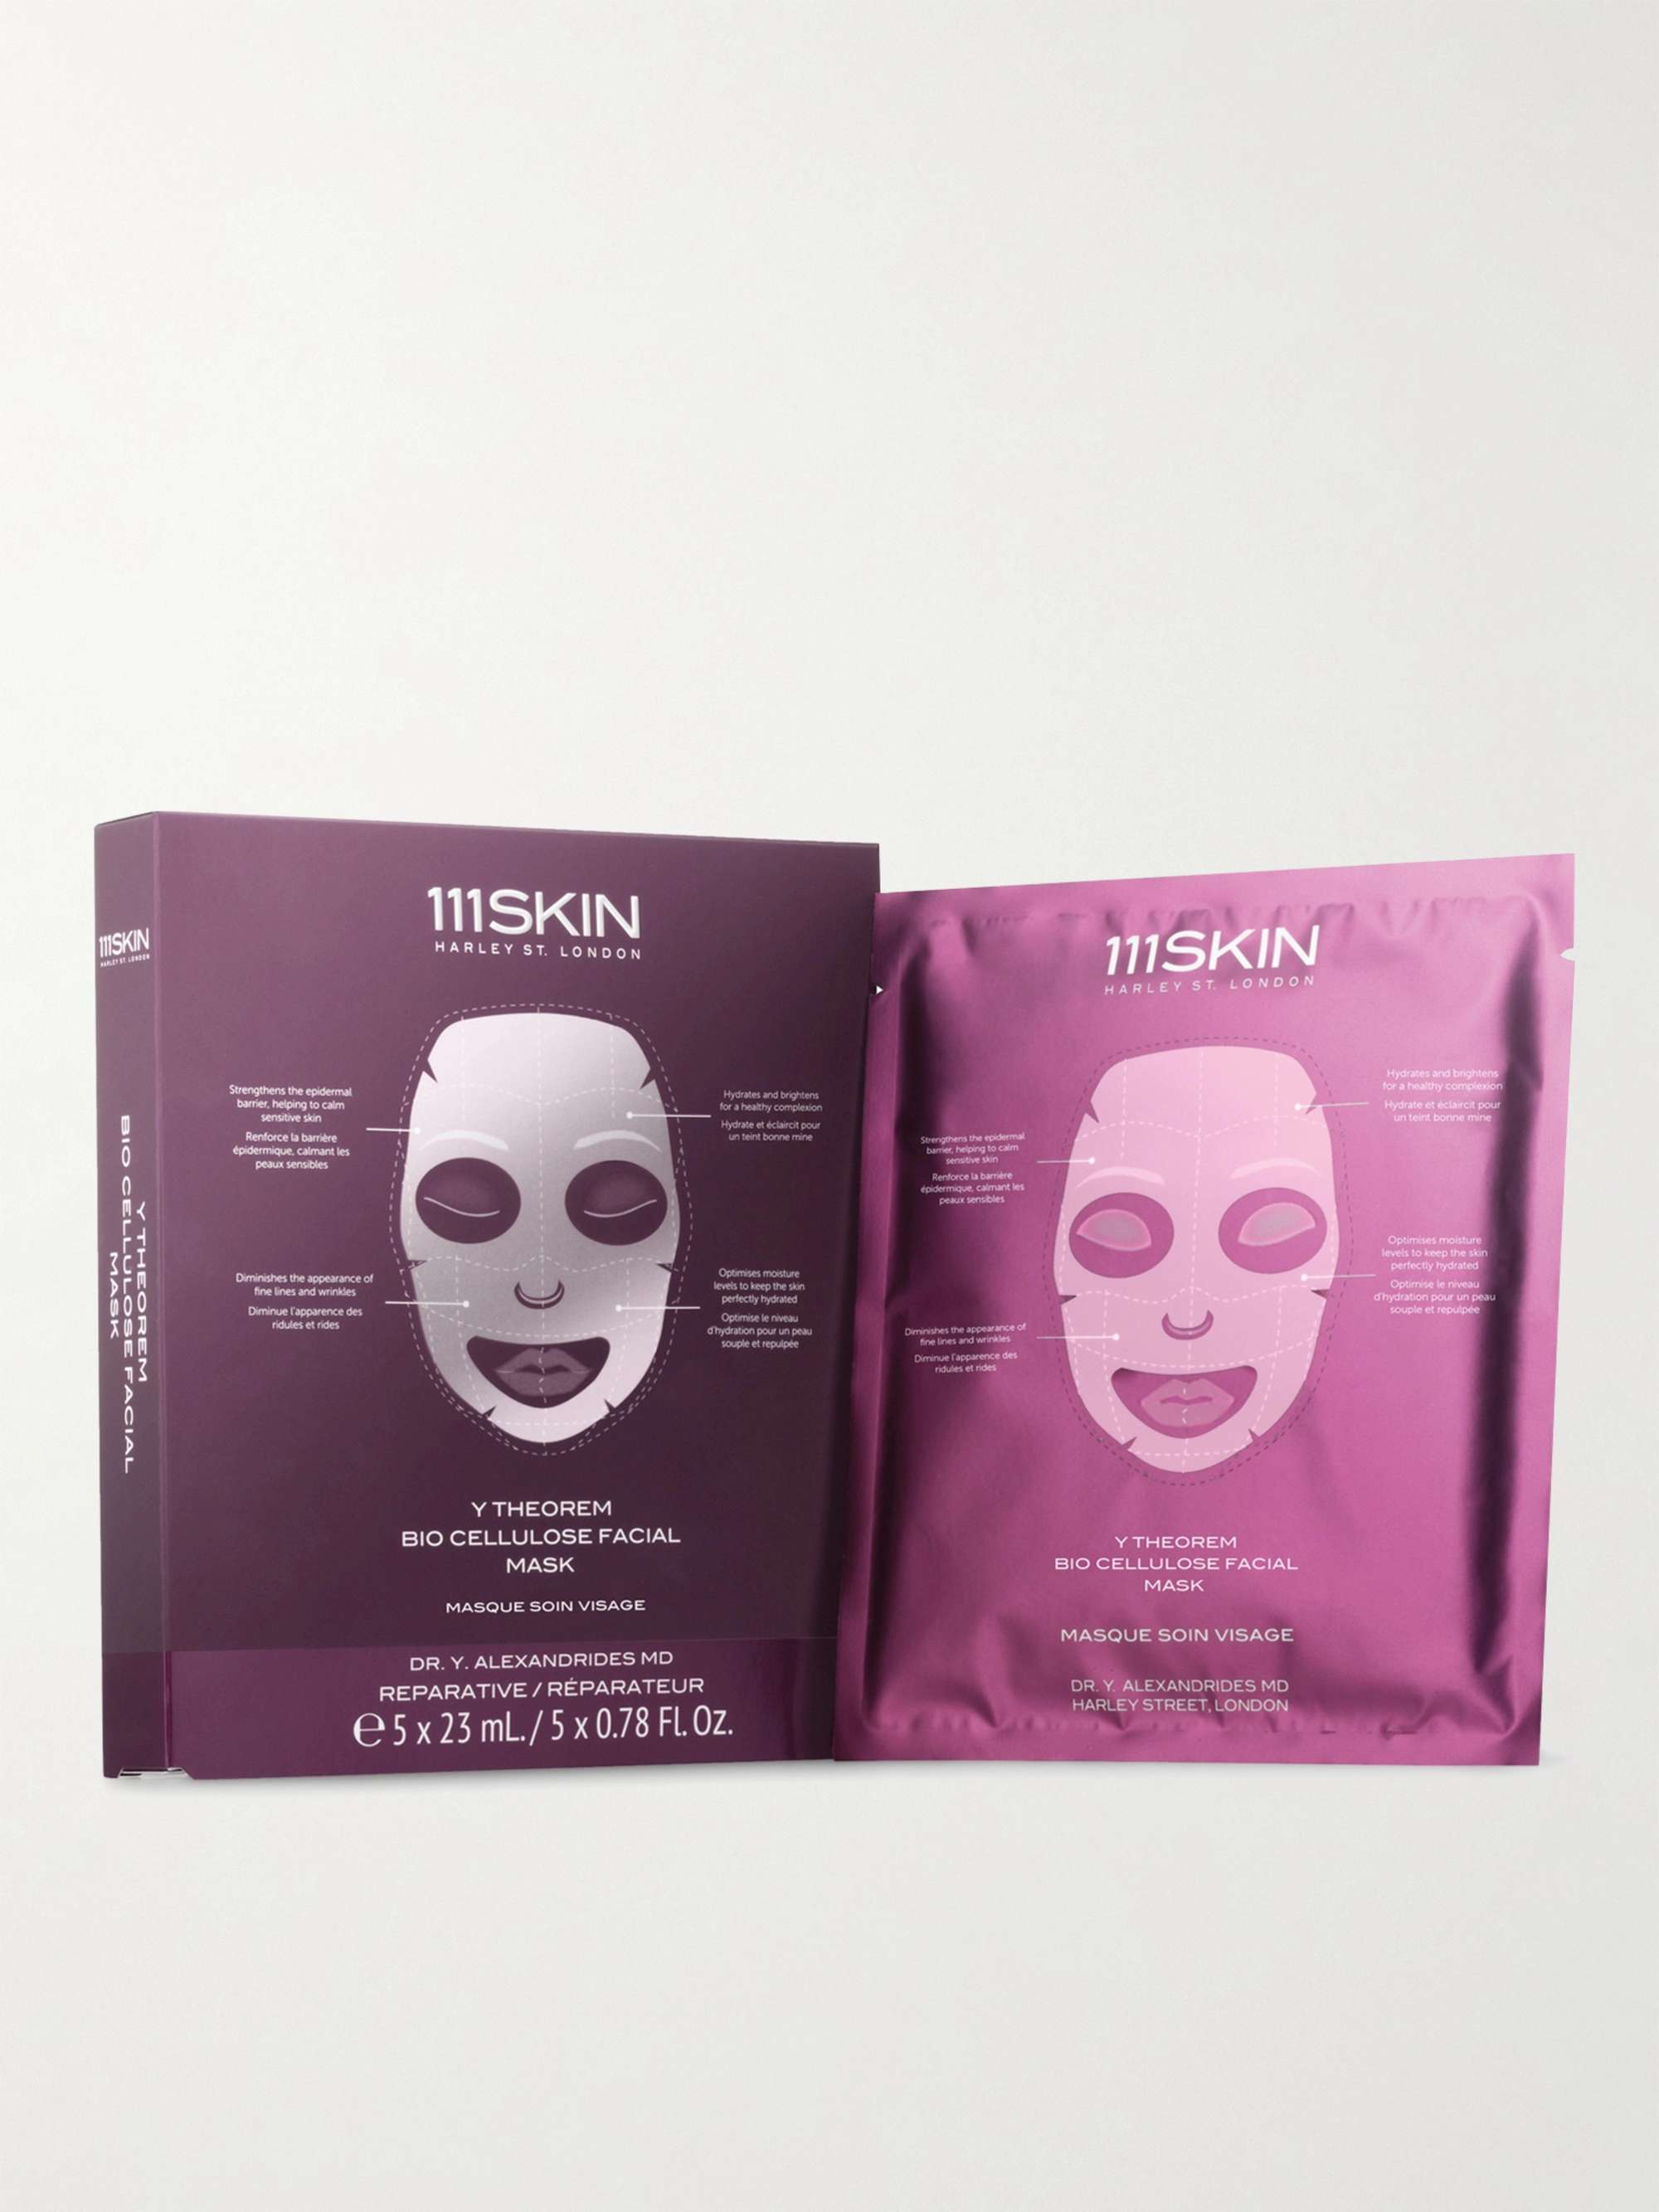 111SKIN Y Theorem Bio Cellulose Facial Masks, 5 x 23ml